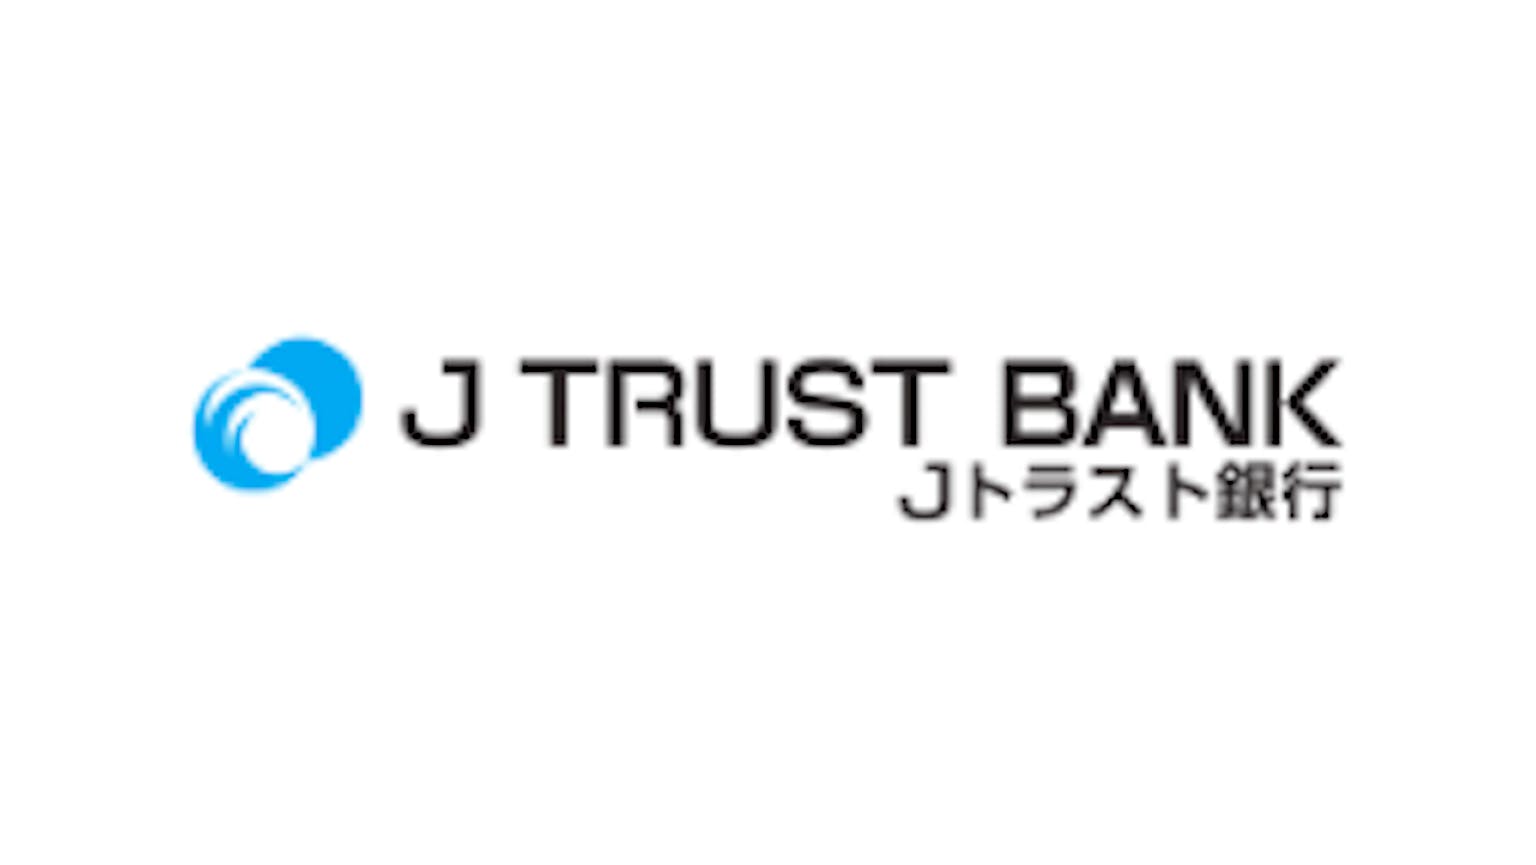 J Trust Bank